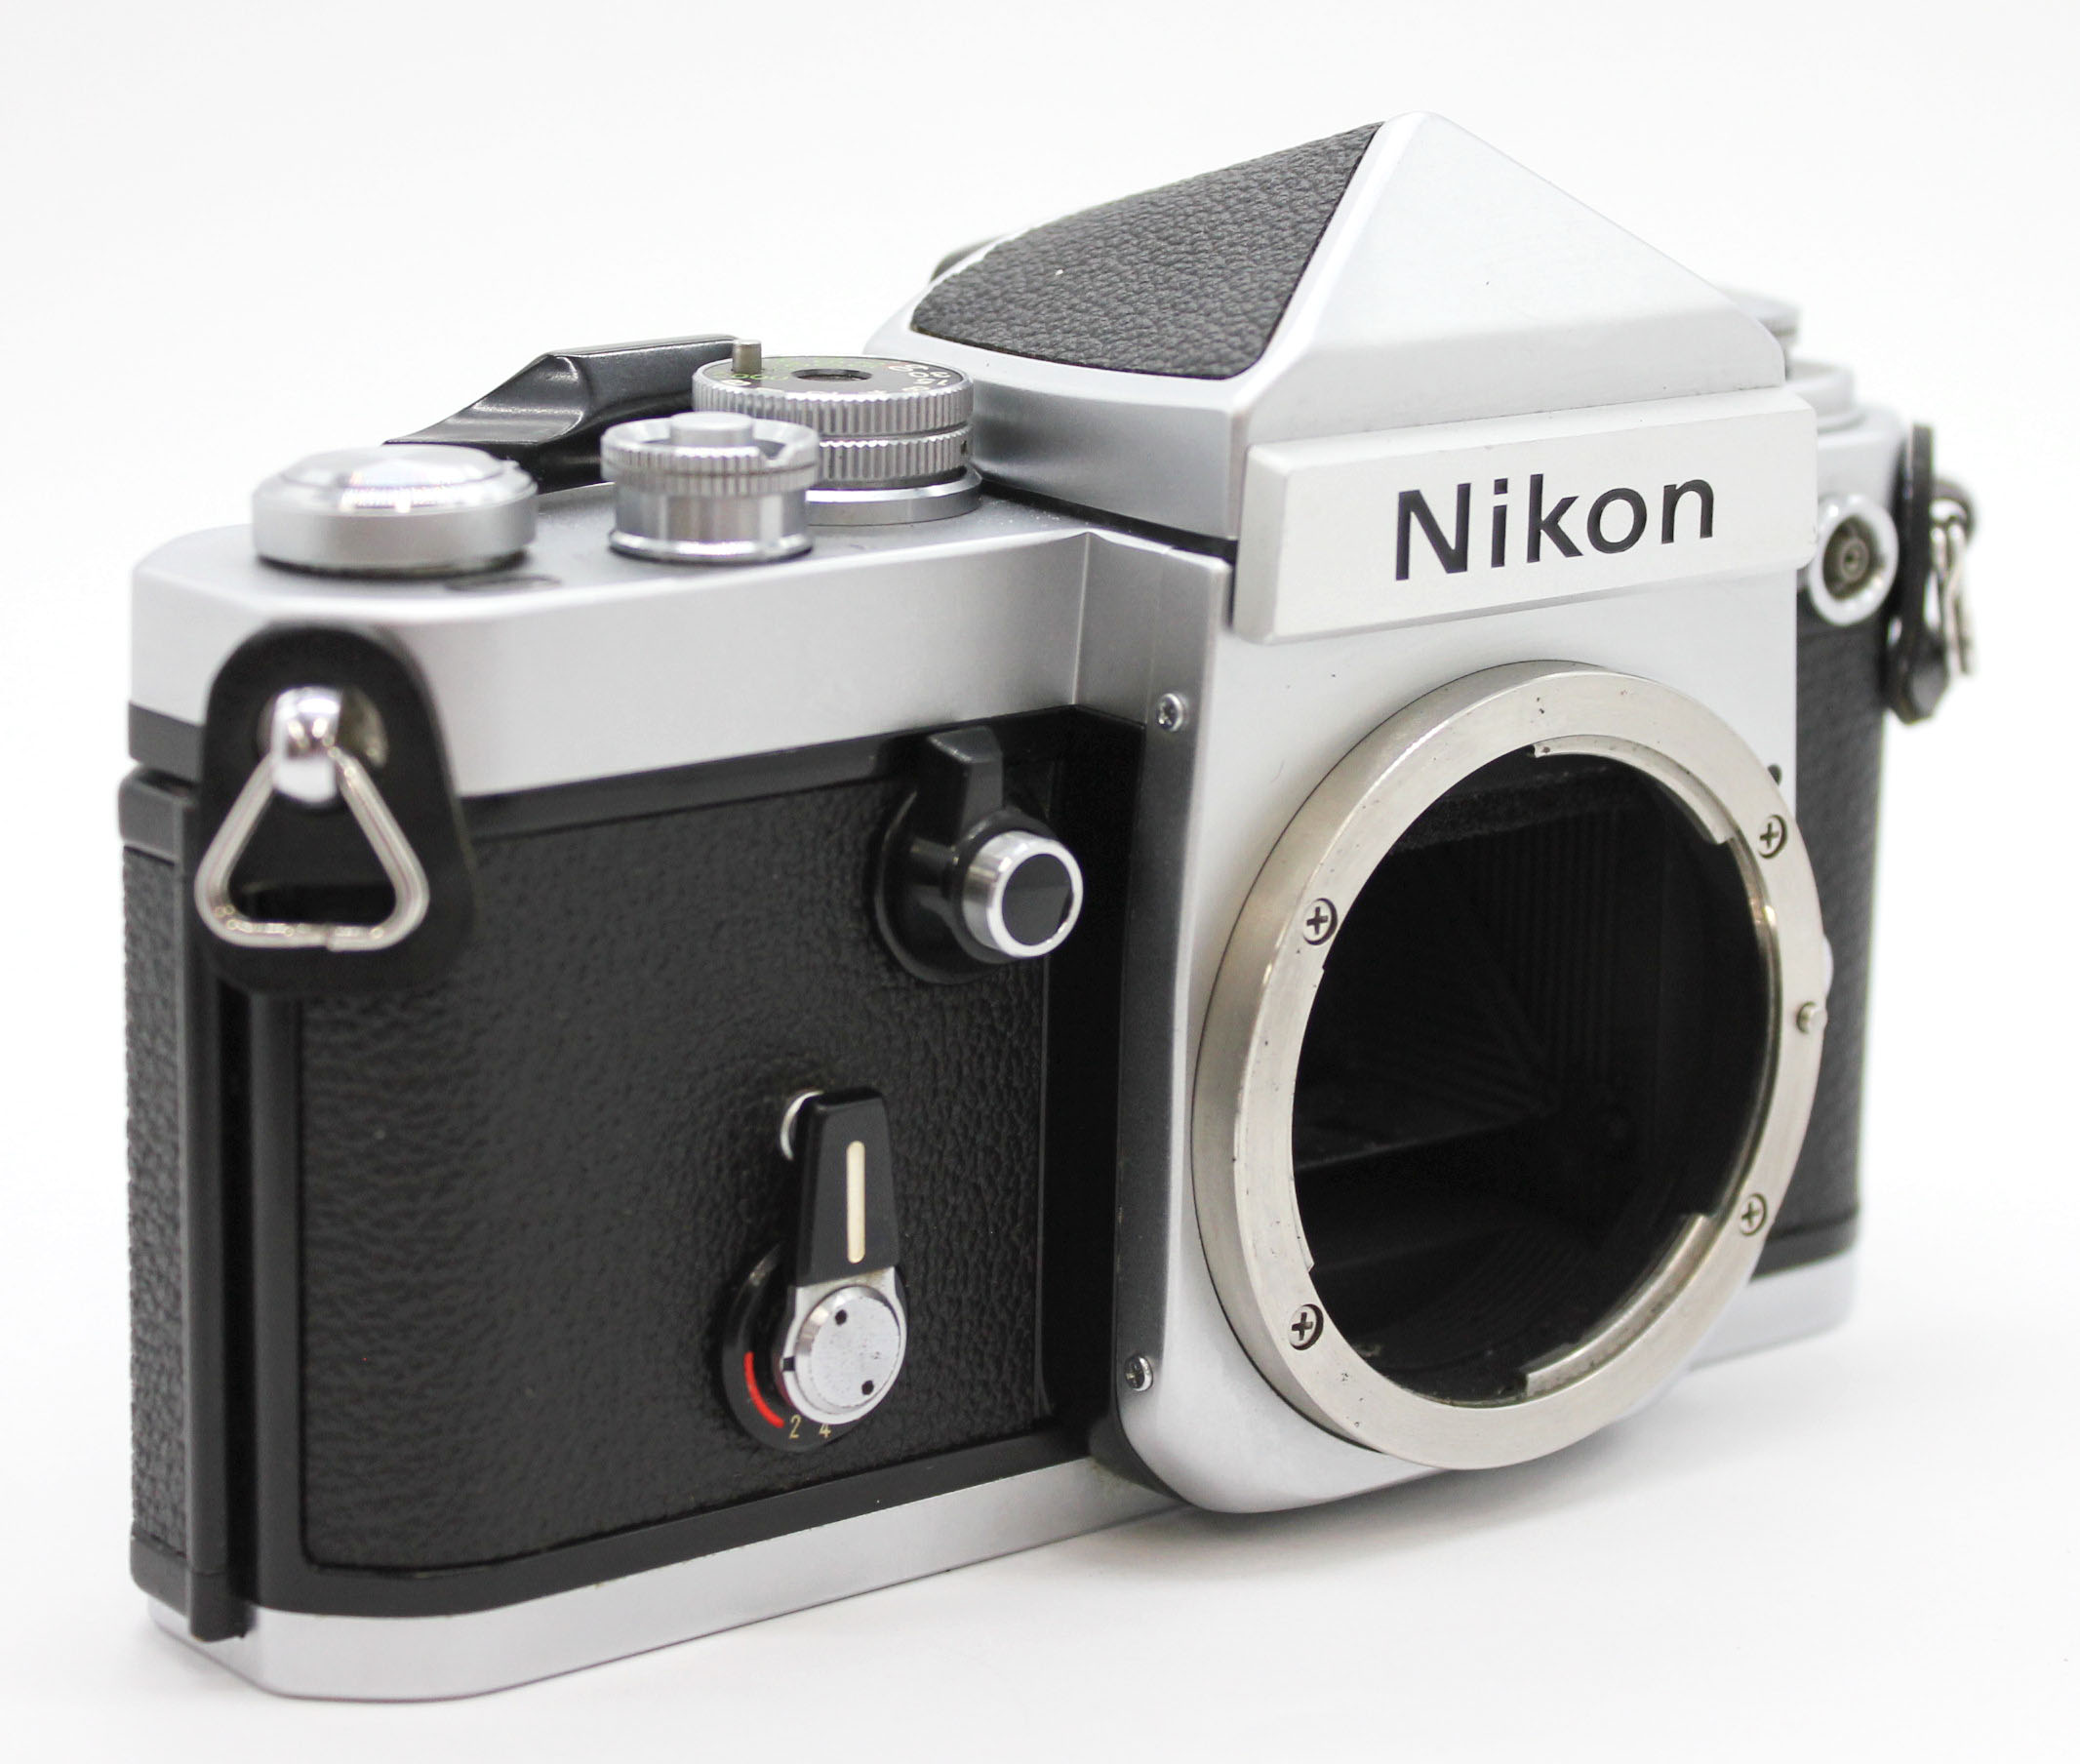  Nikon F2 Eye Level 35mm SLR Film Camera S/N 784* w/ DE-1 View Finder from Japan Photo 2